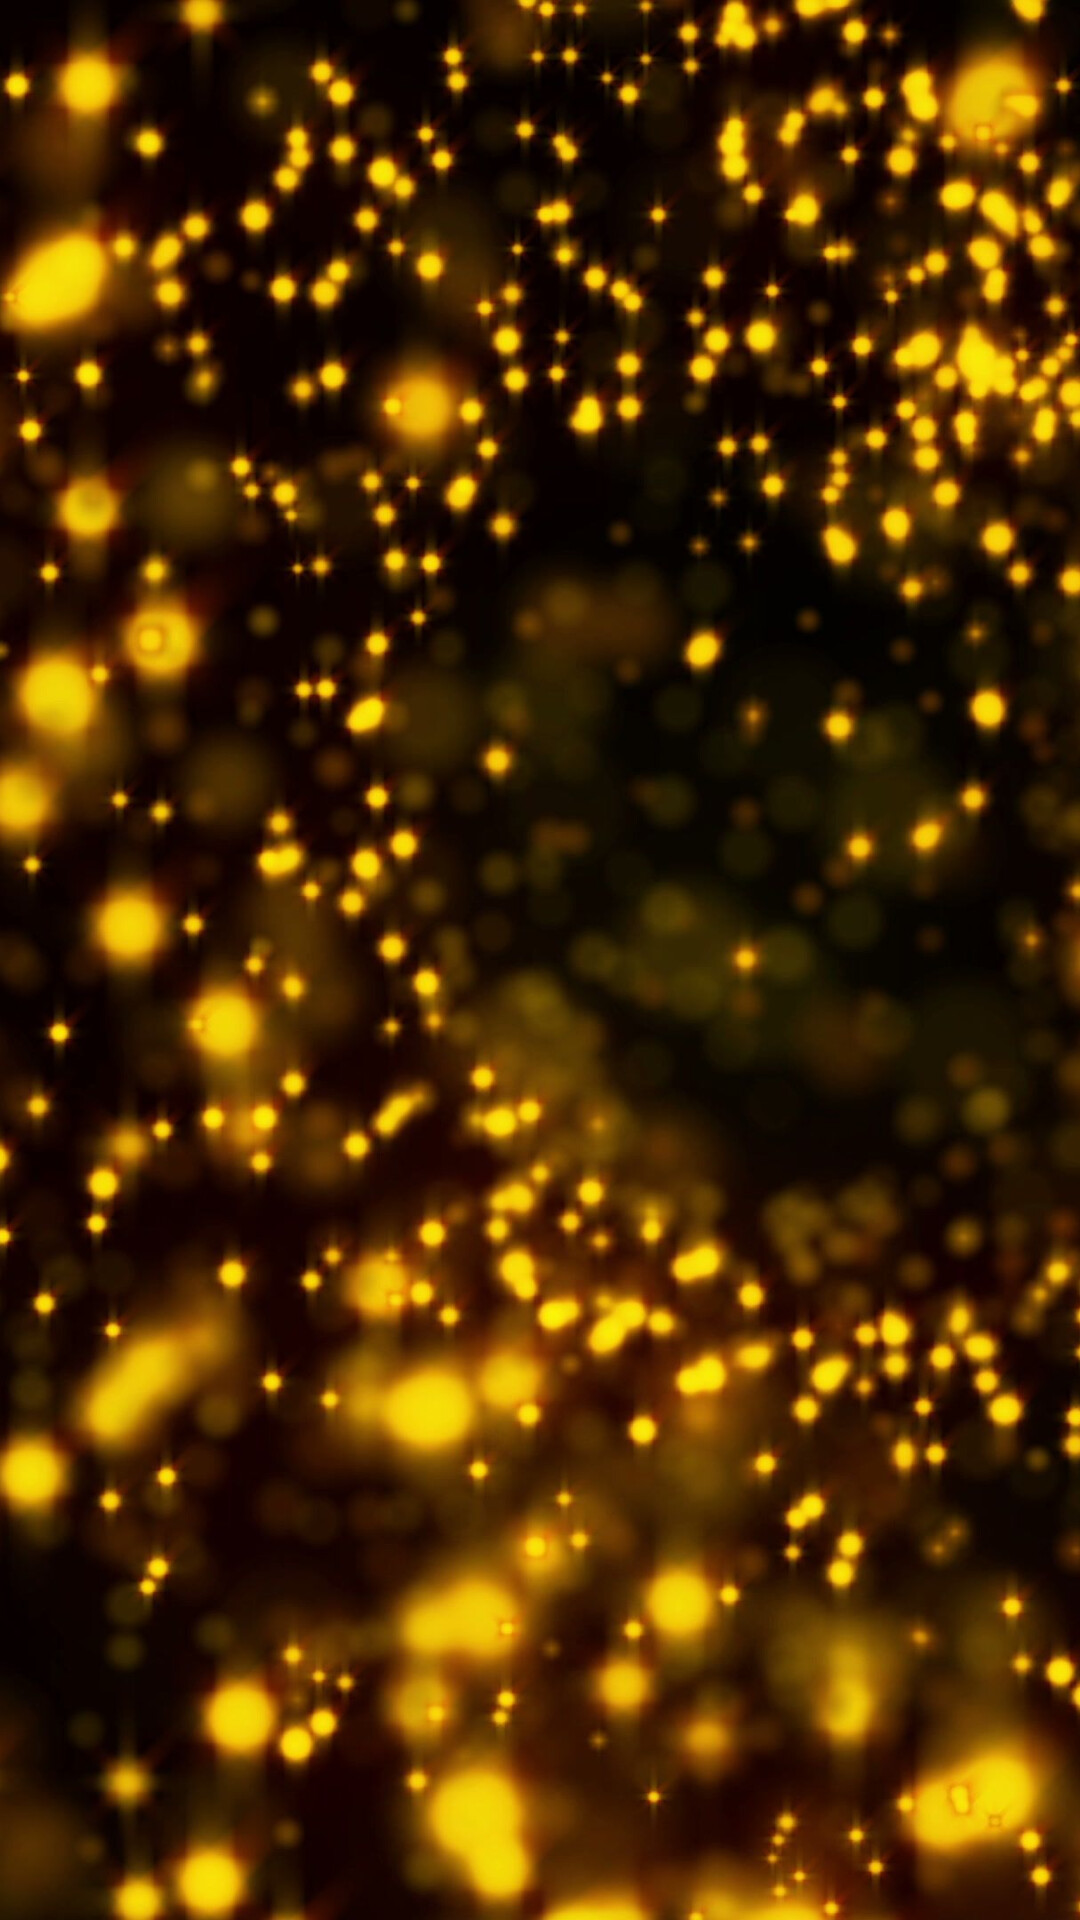 Gold Dots: Holiday blurred decorative holiday lights, Christmas tree lights, Bokeh effect. 1080x1920 Full HD Wallpaper.